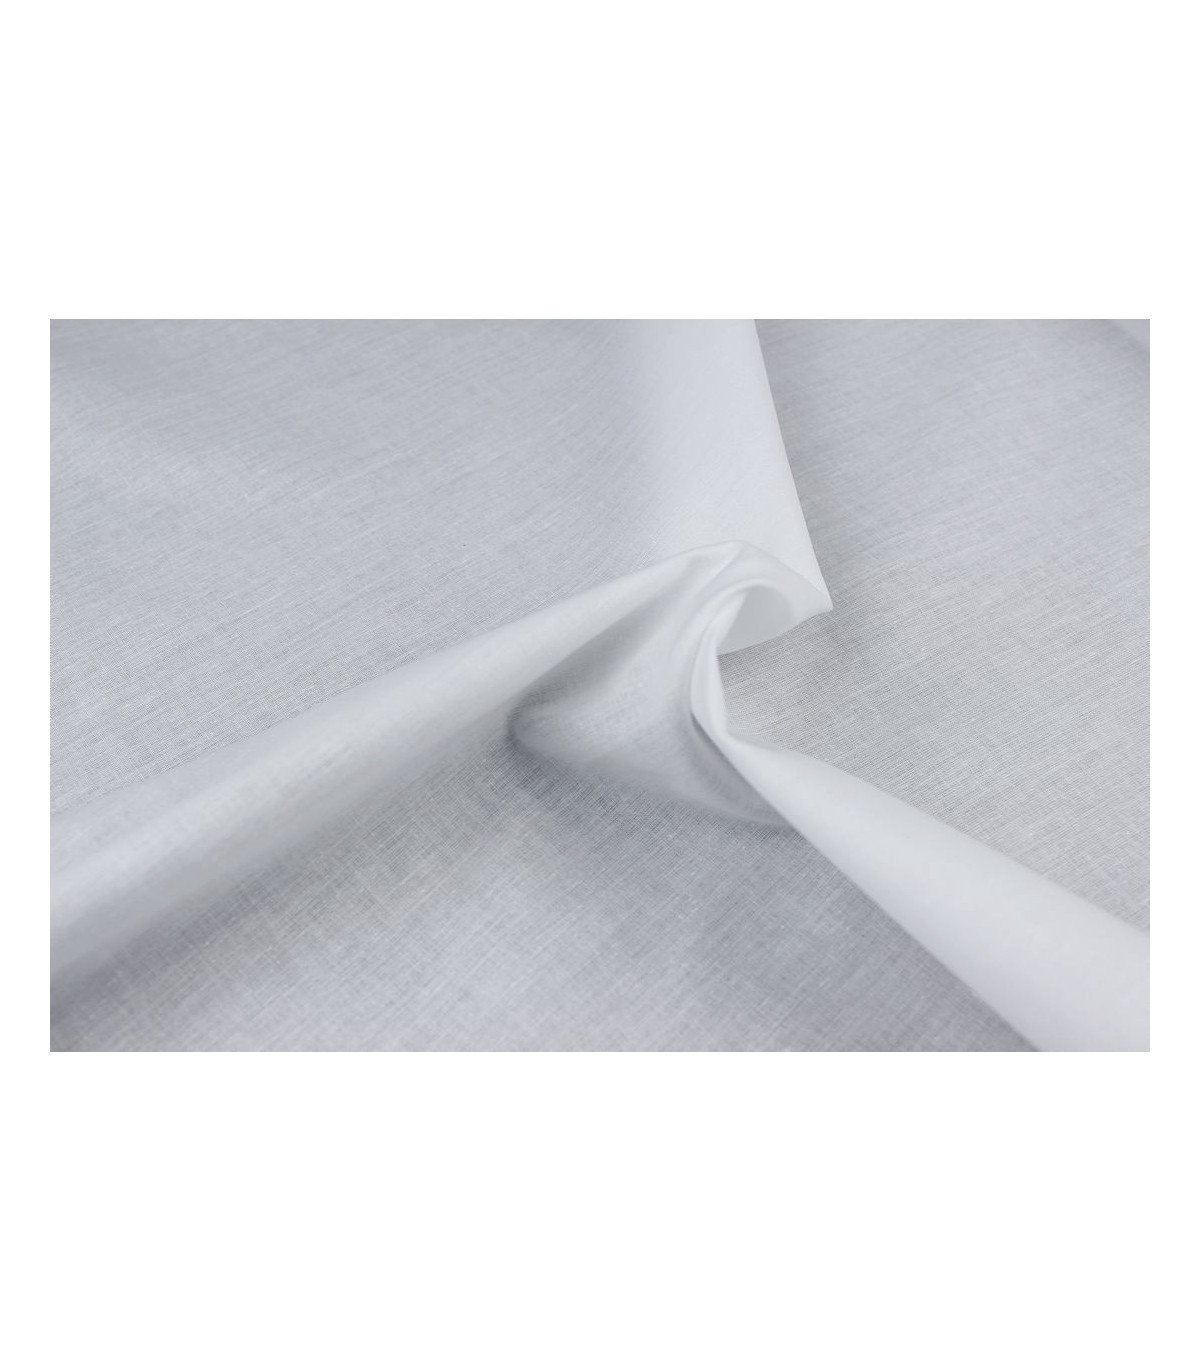 200 x 160 cm| Crudo certificada por Oeko-Tex Standard 100-145 gr/m² Fijada 100% algodón Anti-Encogimiento Kt KILOtela Tela de glasilla para patronaje 